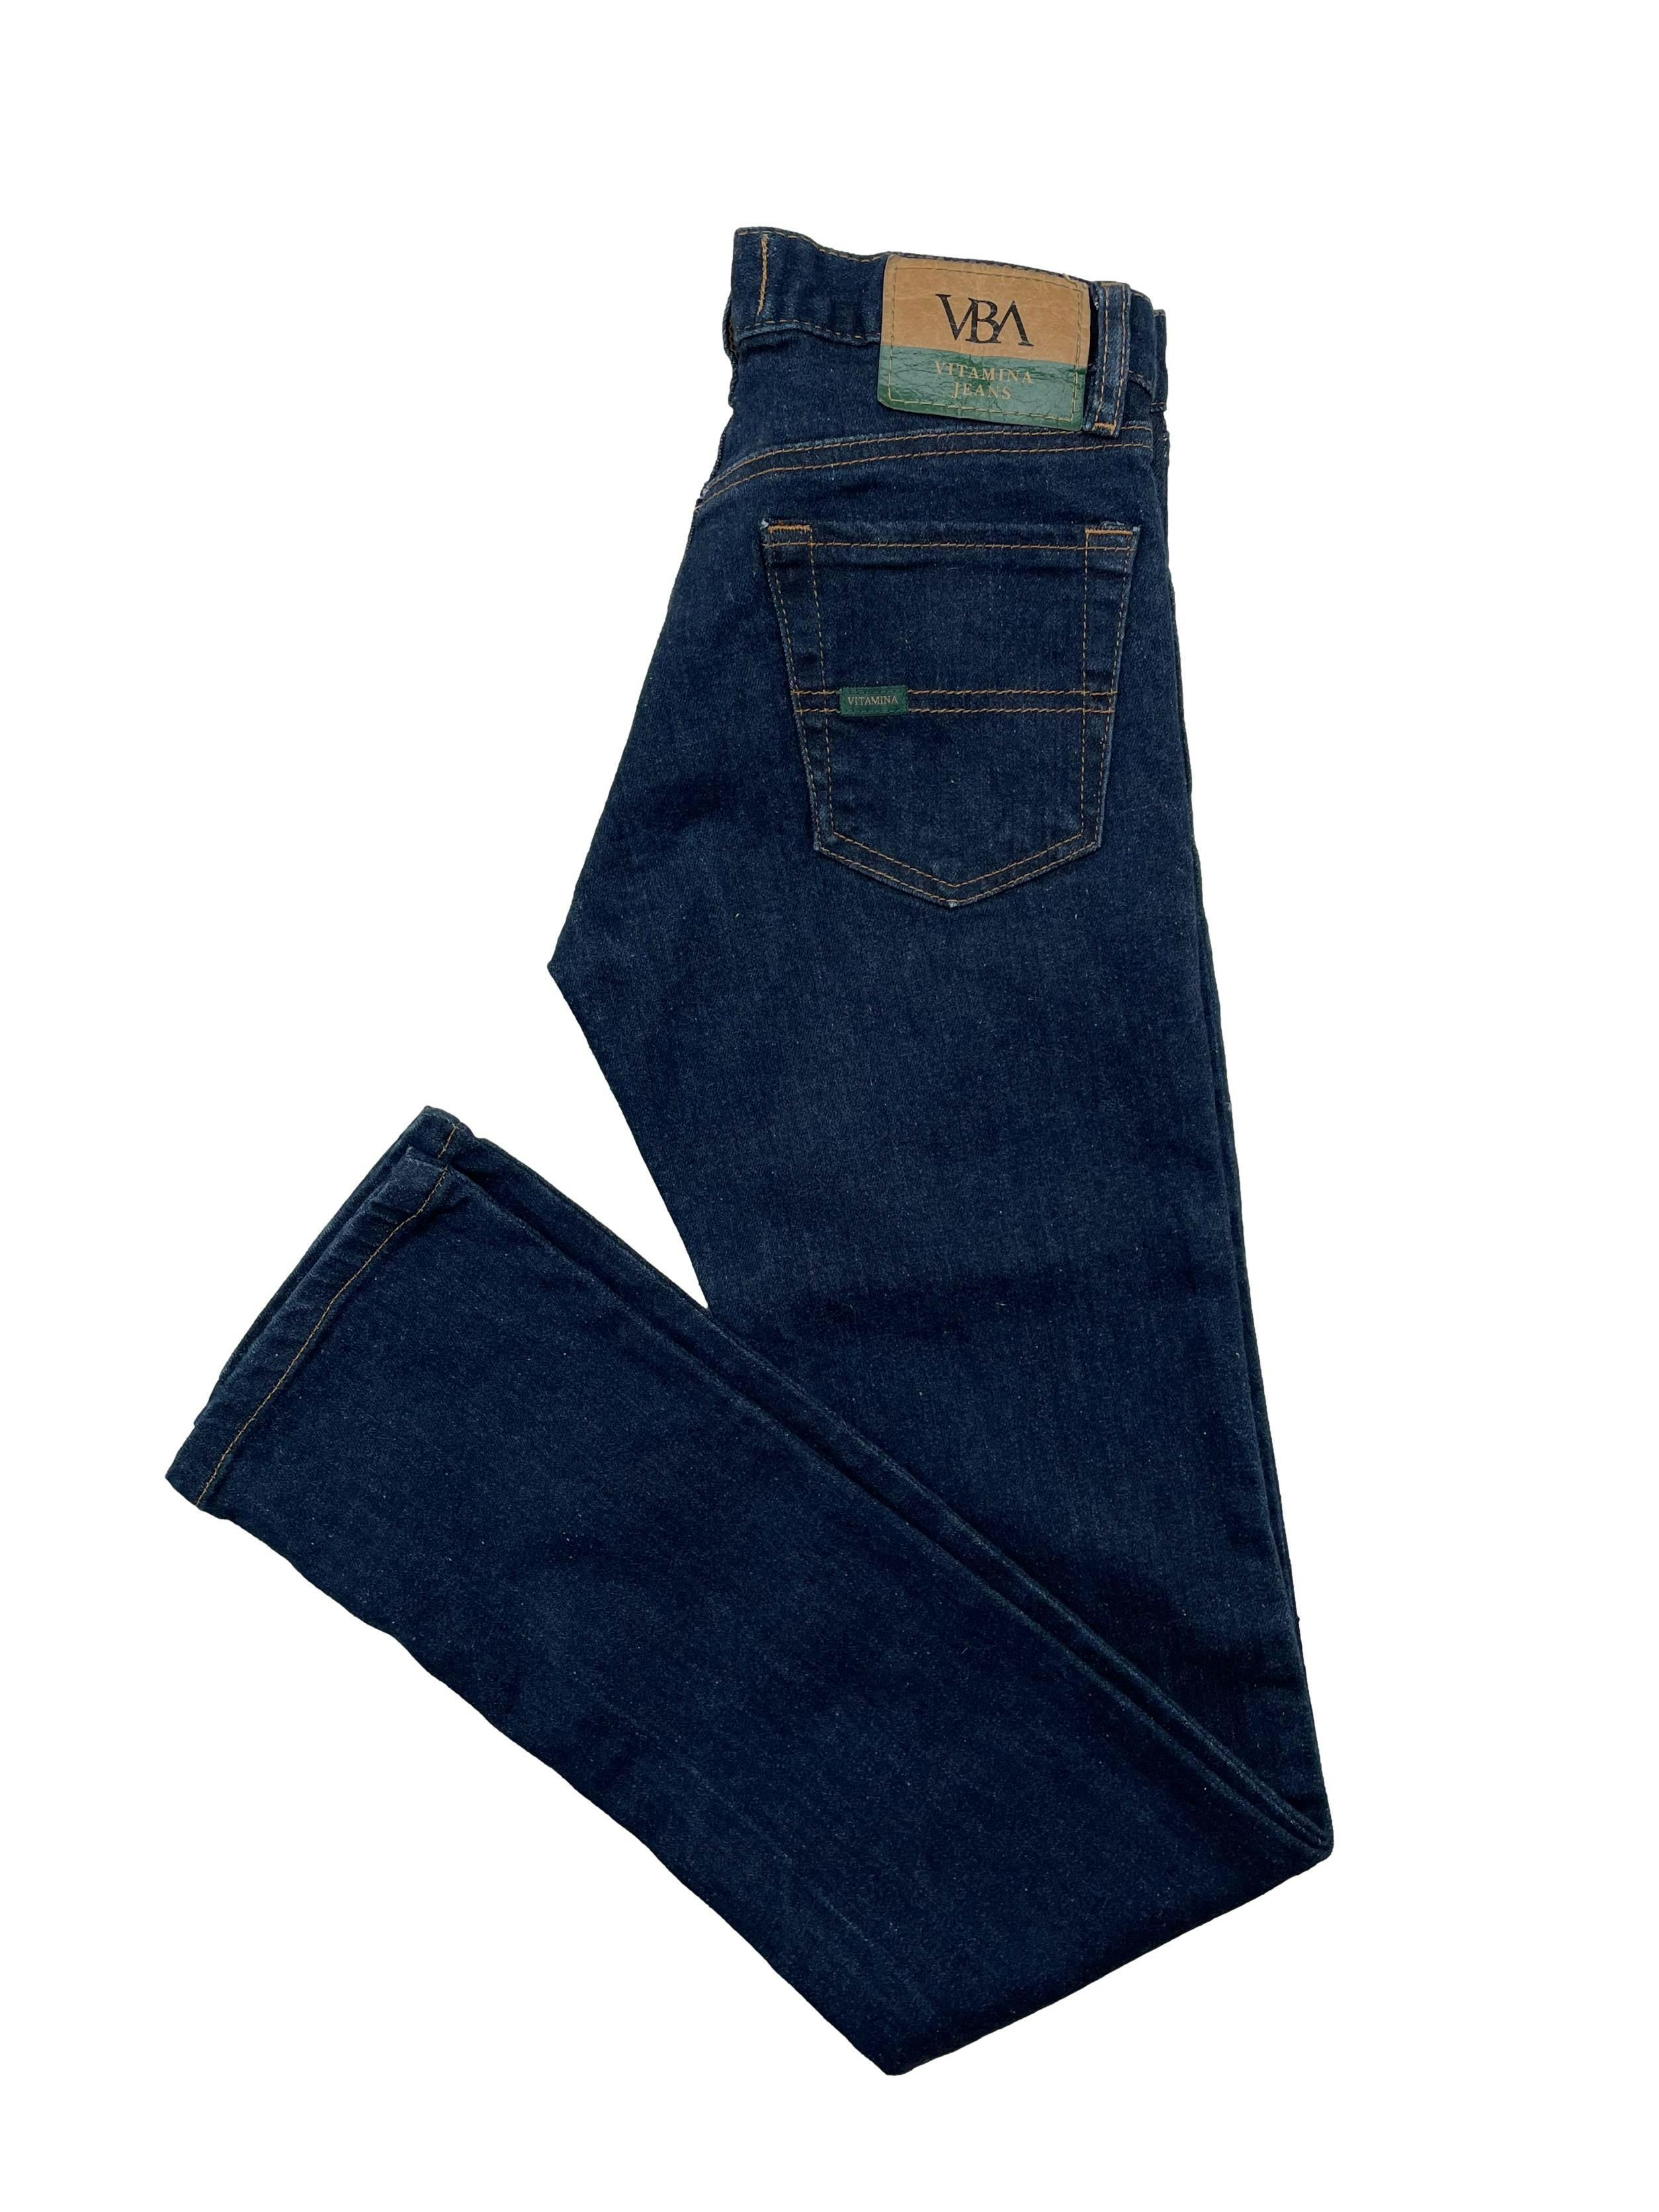 Jean marca argentina Vitamina, 98% algodón 2%spandex azul, five pockets, tiro medio corte slim. Cintura 66cm Largo 100cm